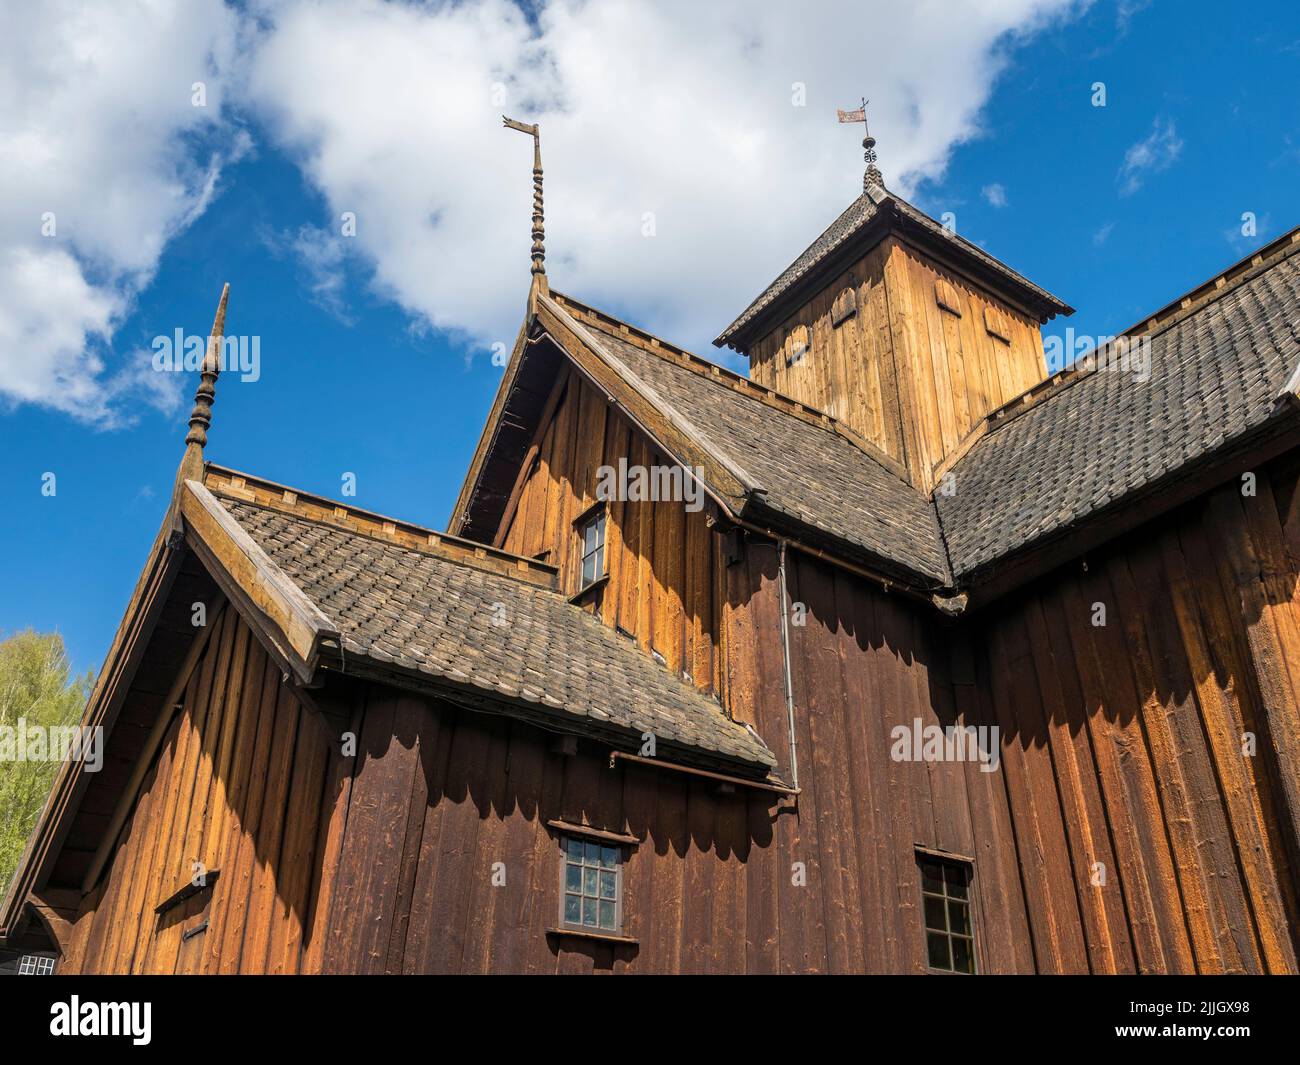 Uvdal stave church, Norway Stock Photo